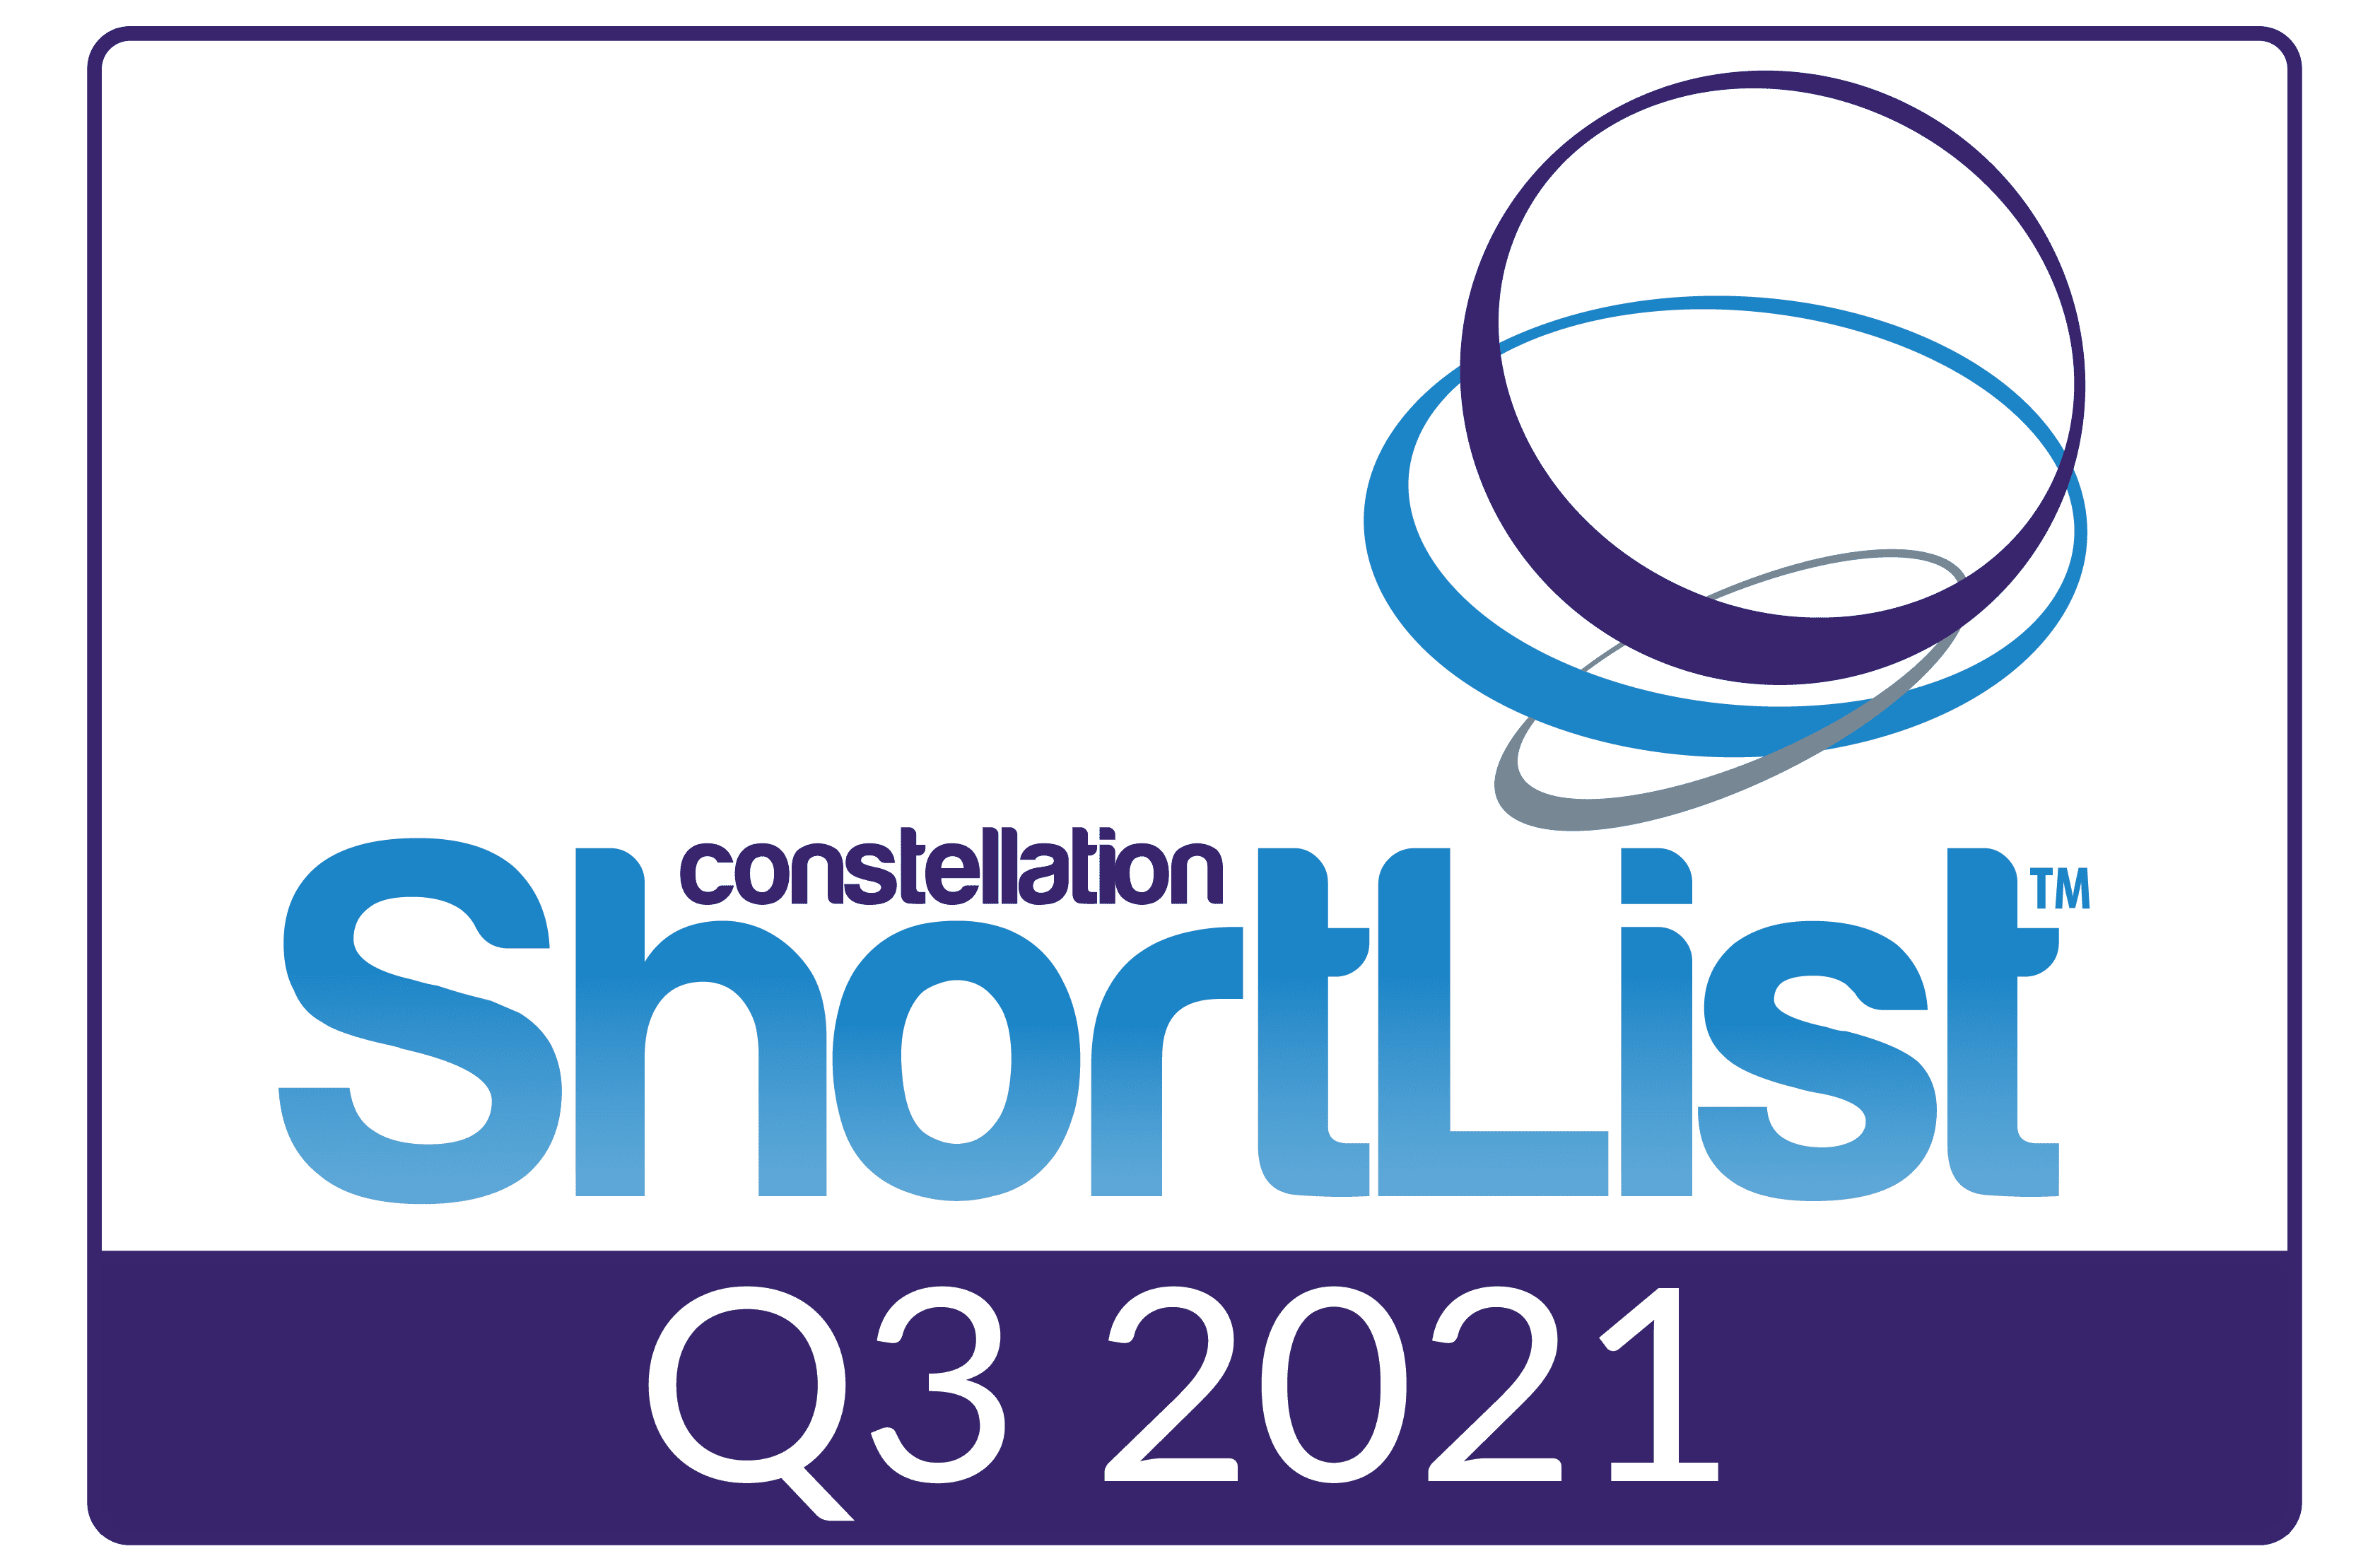 cr-shortlist-member-badge-Q3-2021-01